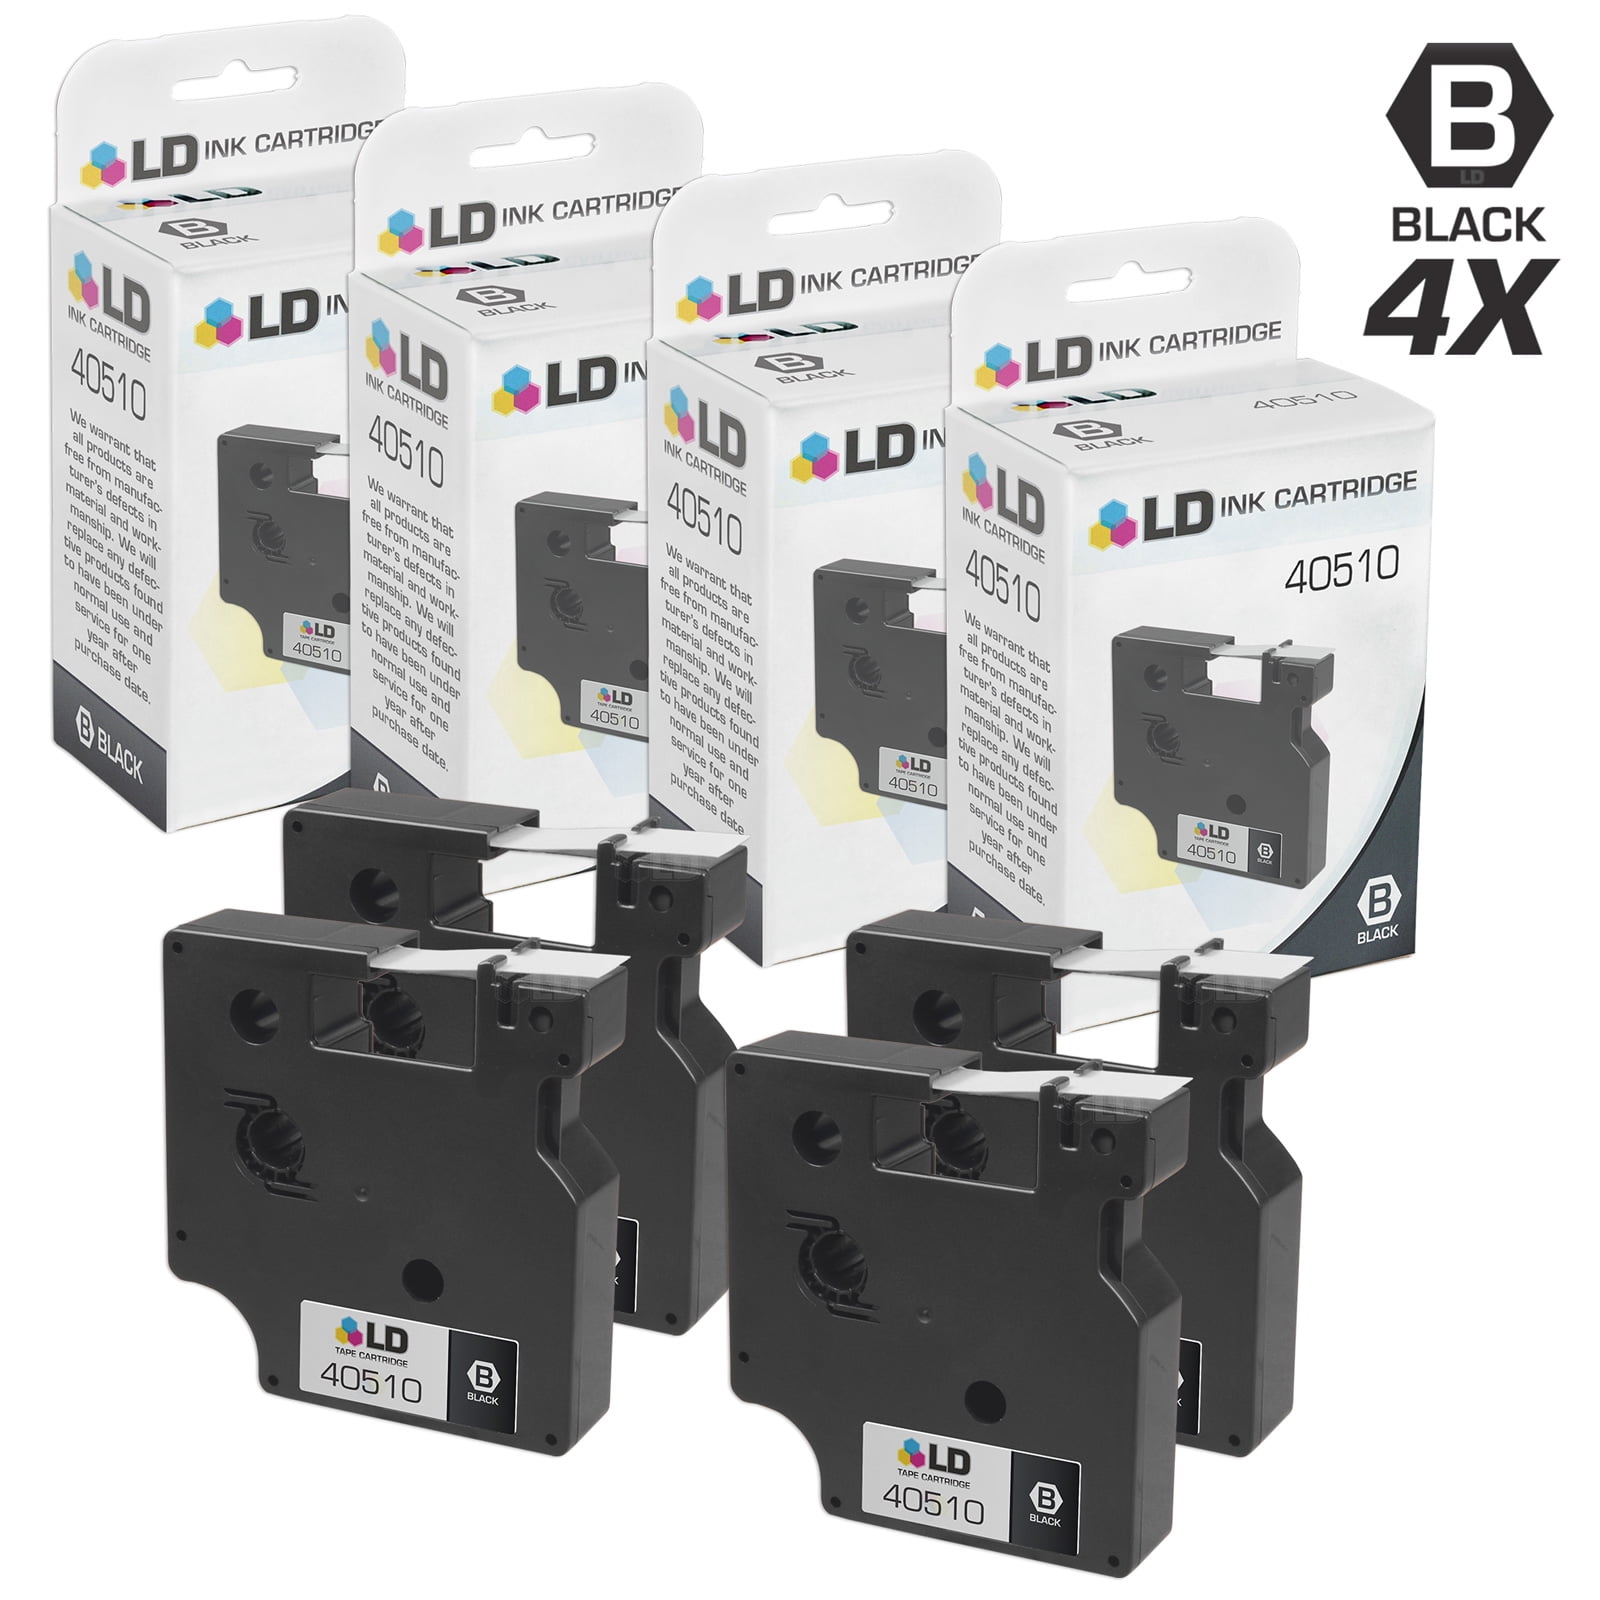 Brady Magnet casing for Handheld Label Maker, Gray, M210 / M211 Series (M21- MAGNET) 